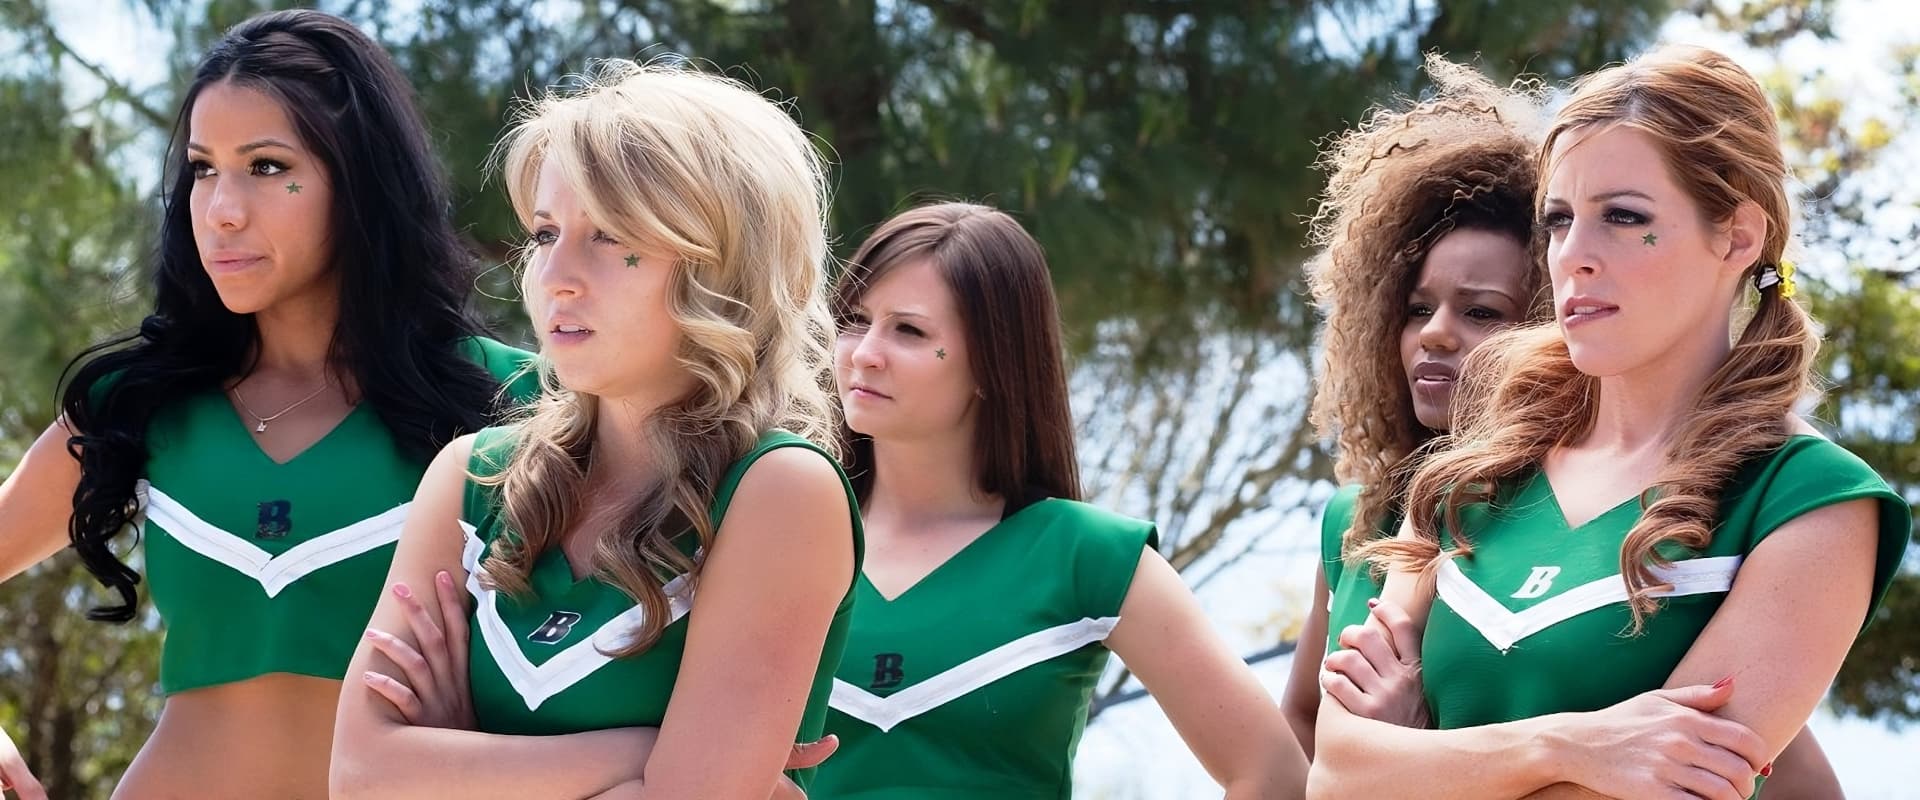 1 Cheerleader Camp (Film, 2010) foto afbeelding